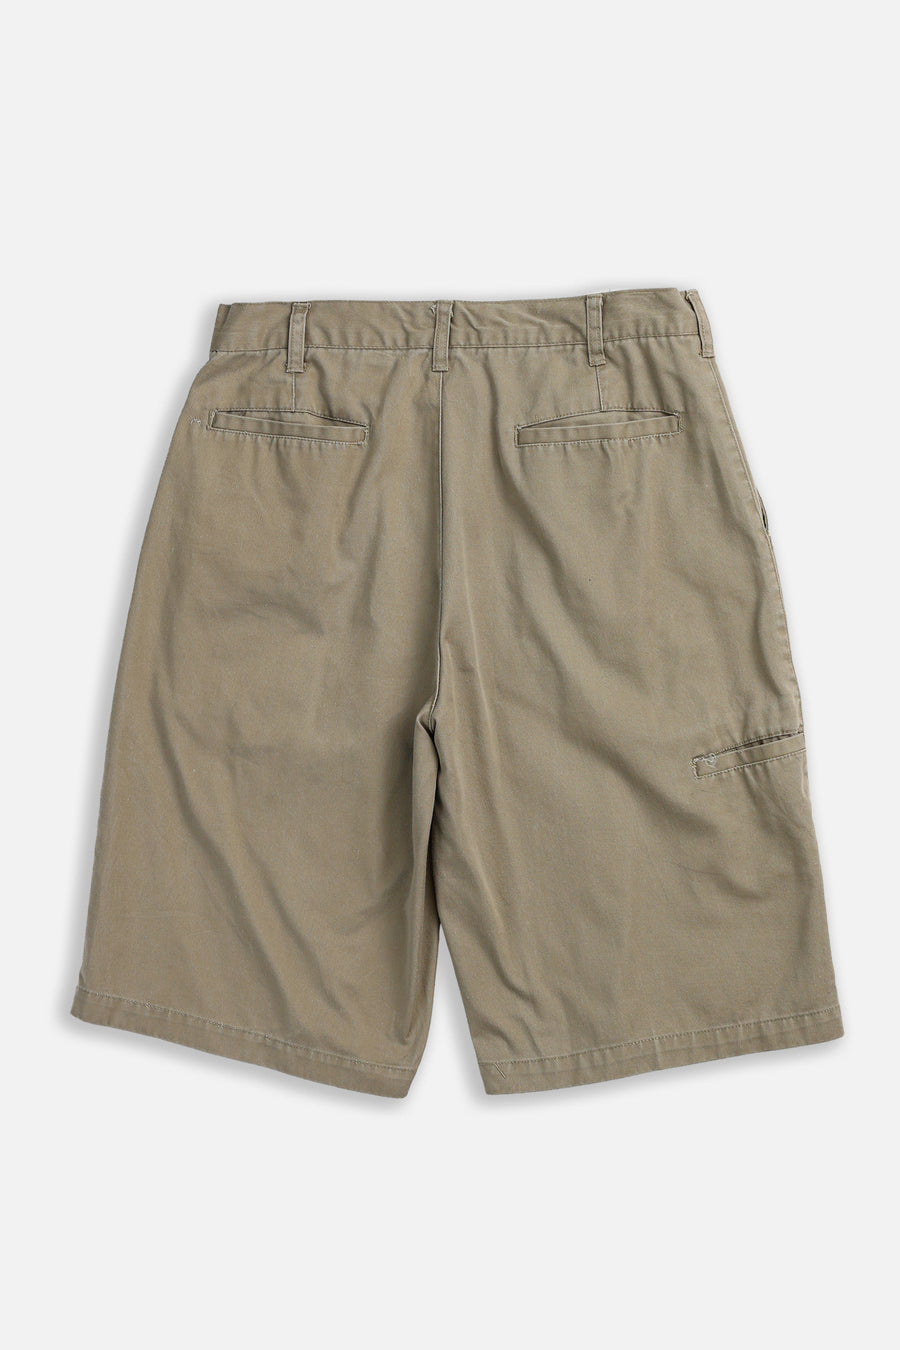 Vintage South Pole Shorts - W34